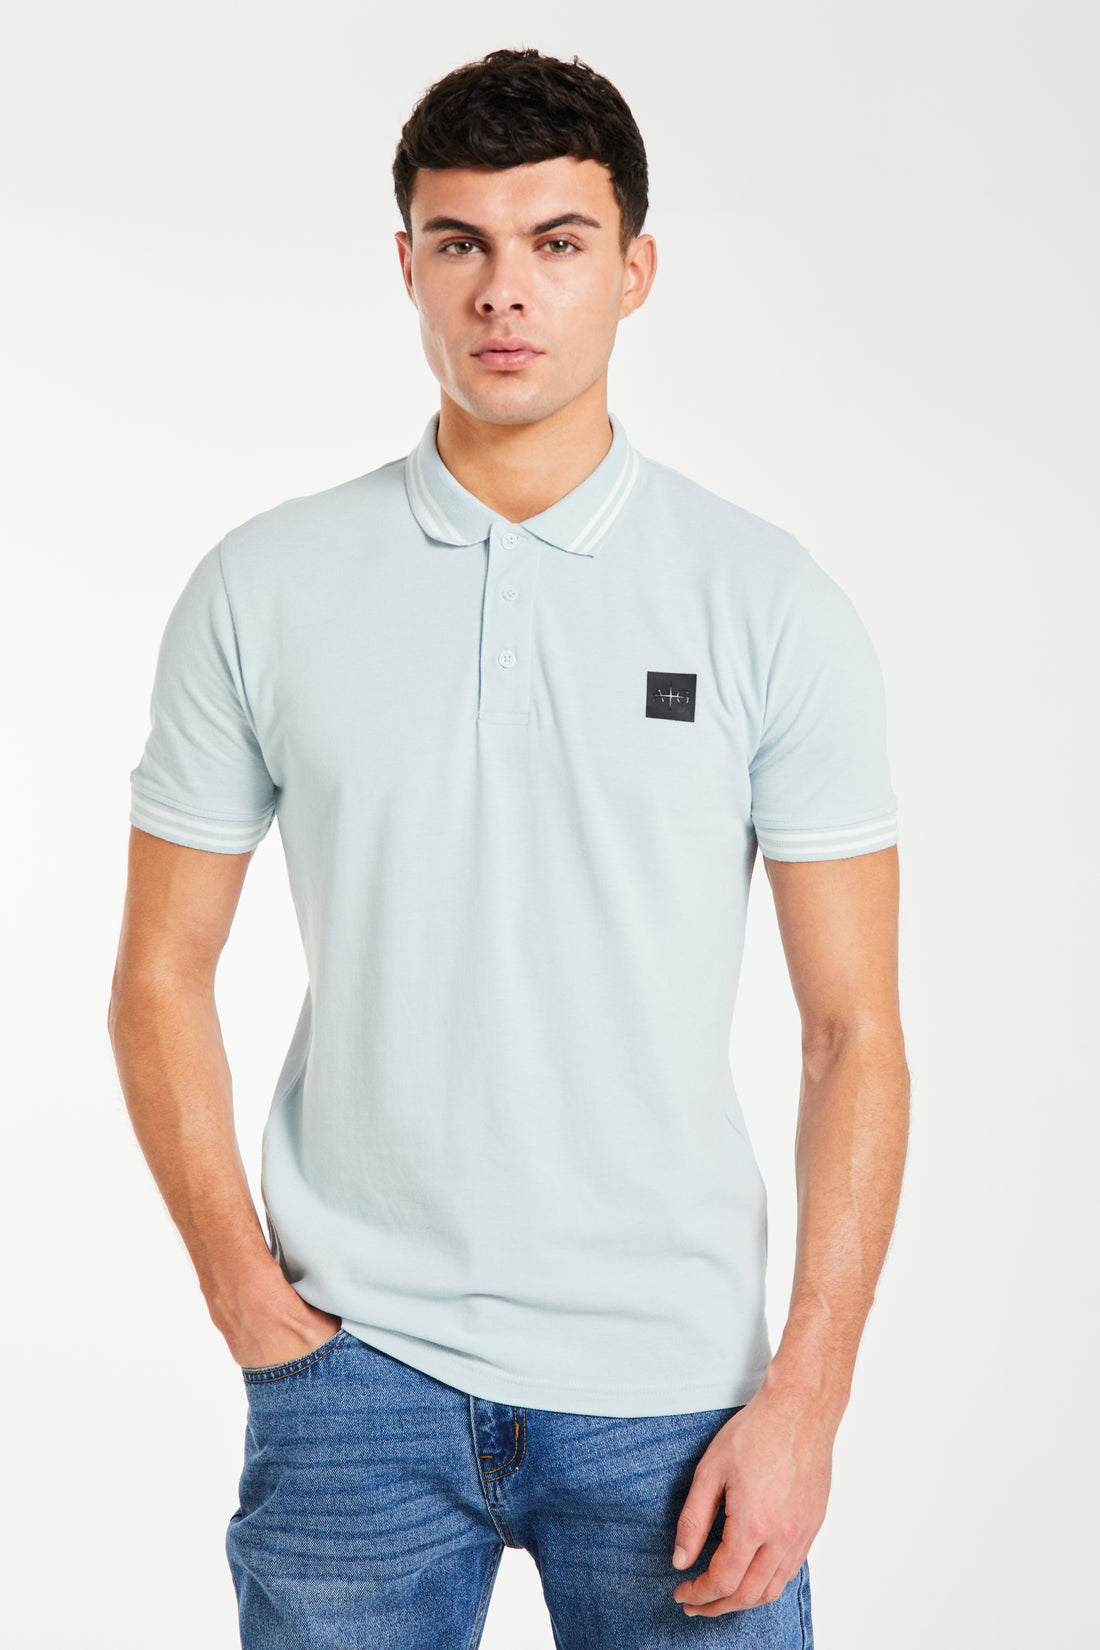 model wearing 'Relate' men's polo shirts sale in sky blue